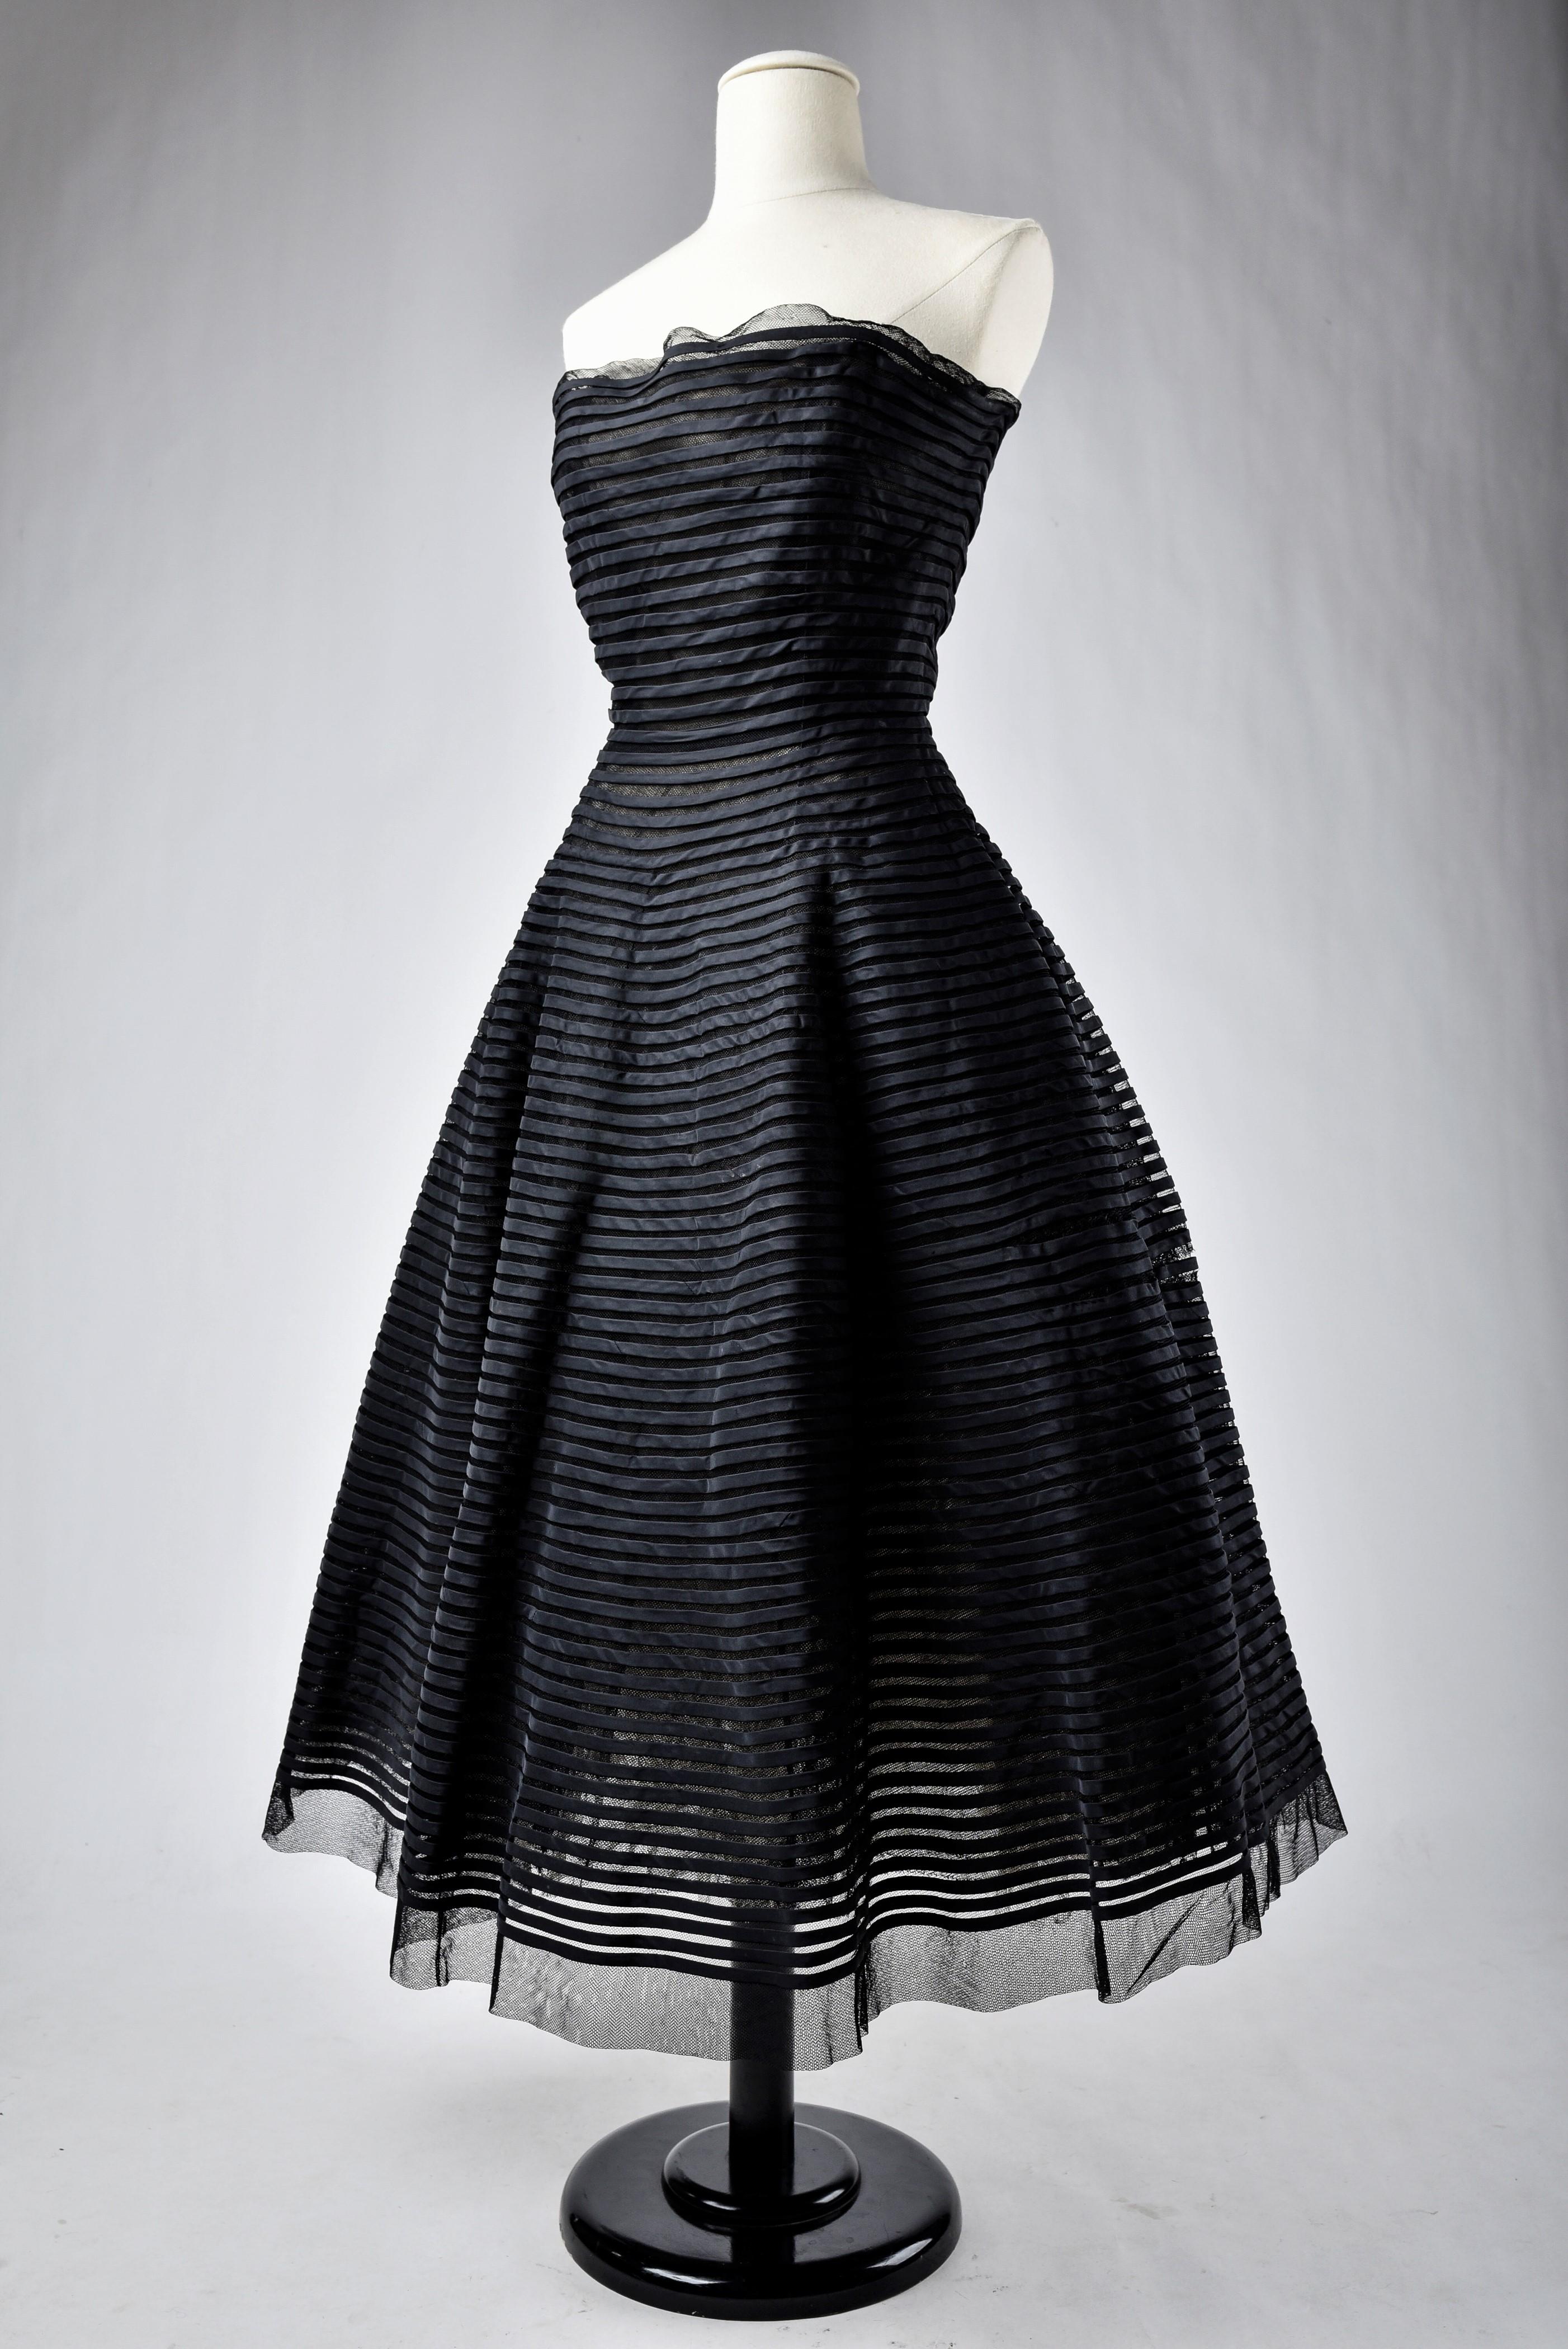 Christian Dior Ball Gown in black tulle & satin appliqué N° 363404 Circa 1955 2